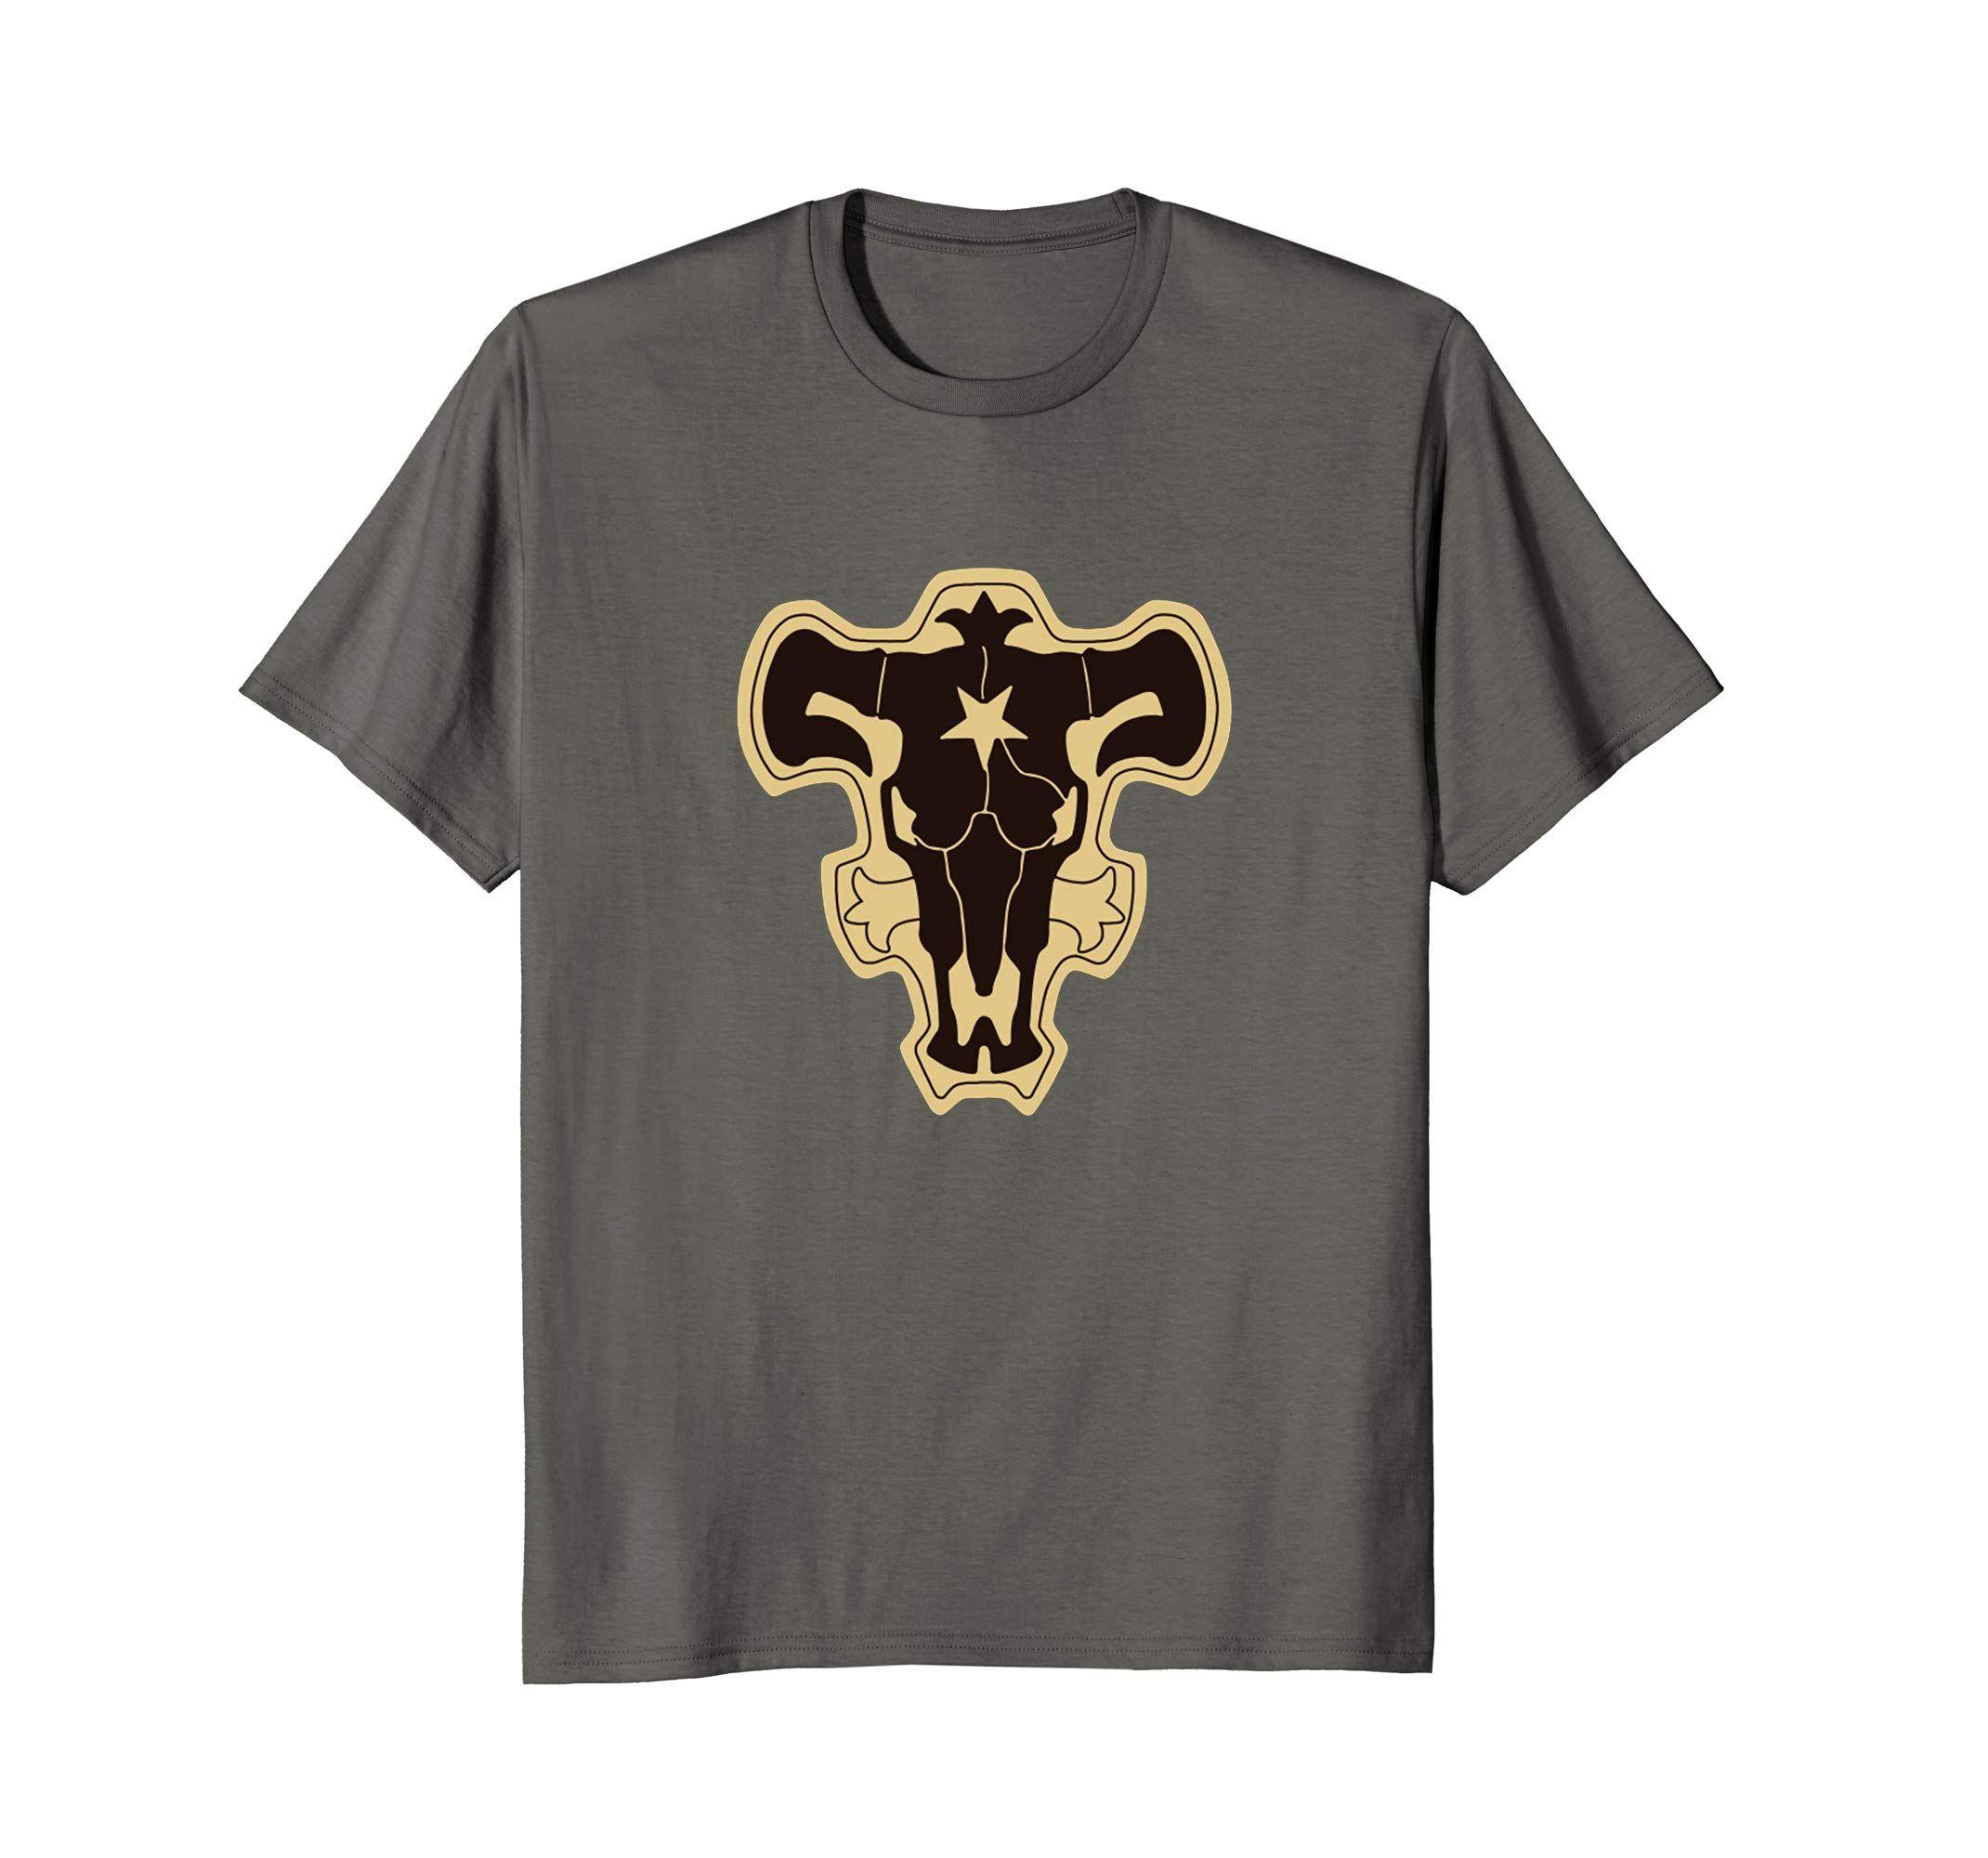 All-Black Bulls Logo - Get Black Bulls Logo Tee Shirt Clover Anime